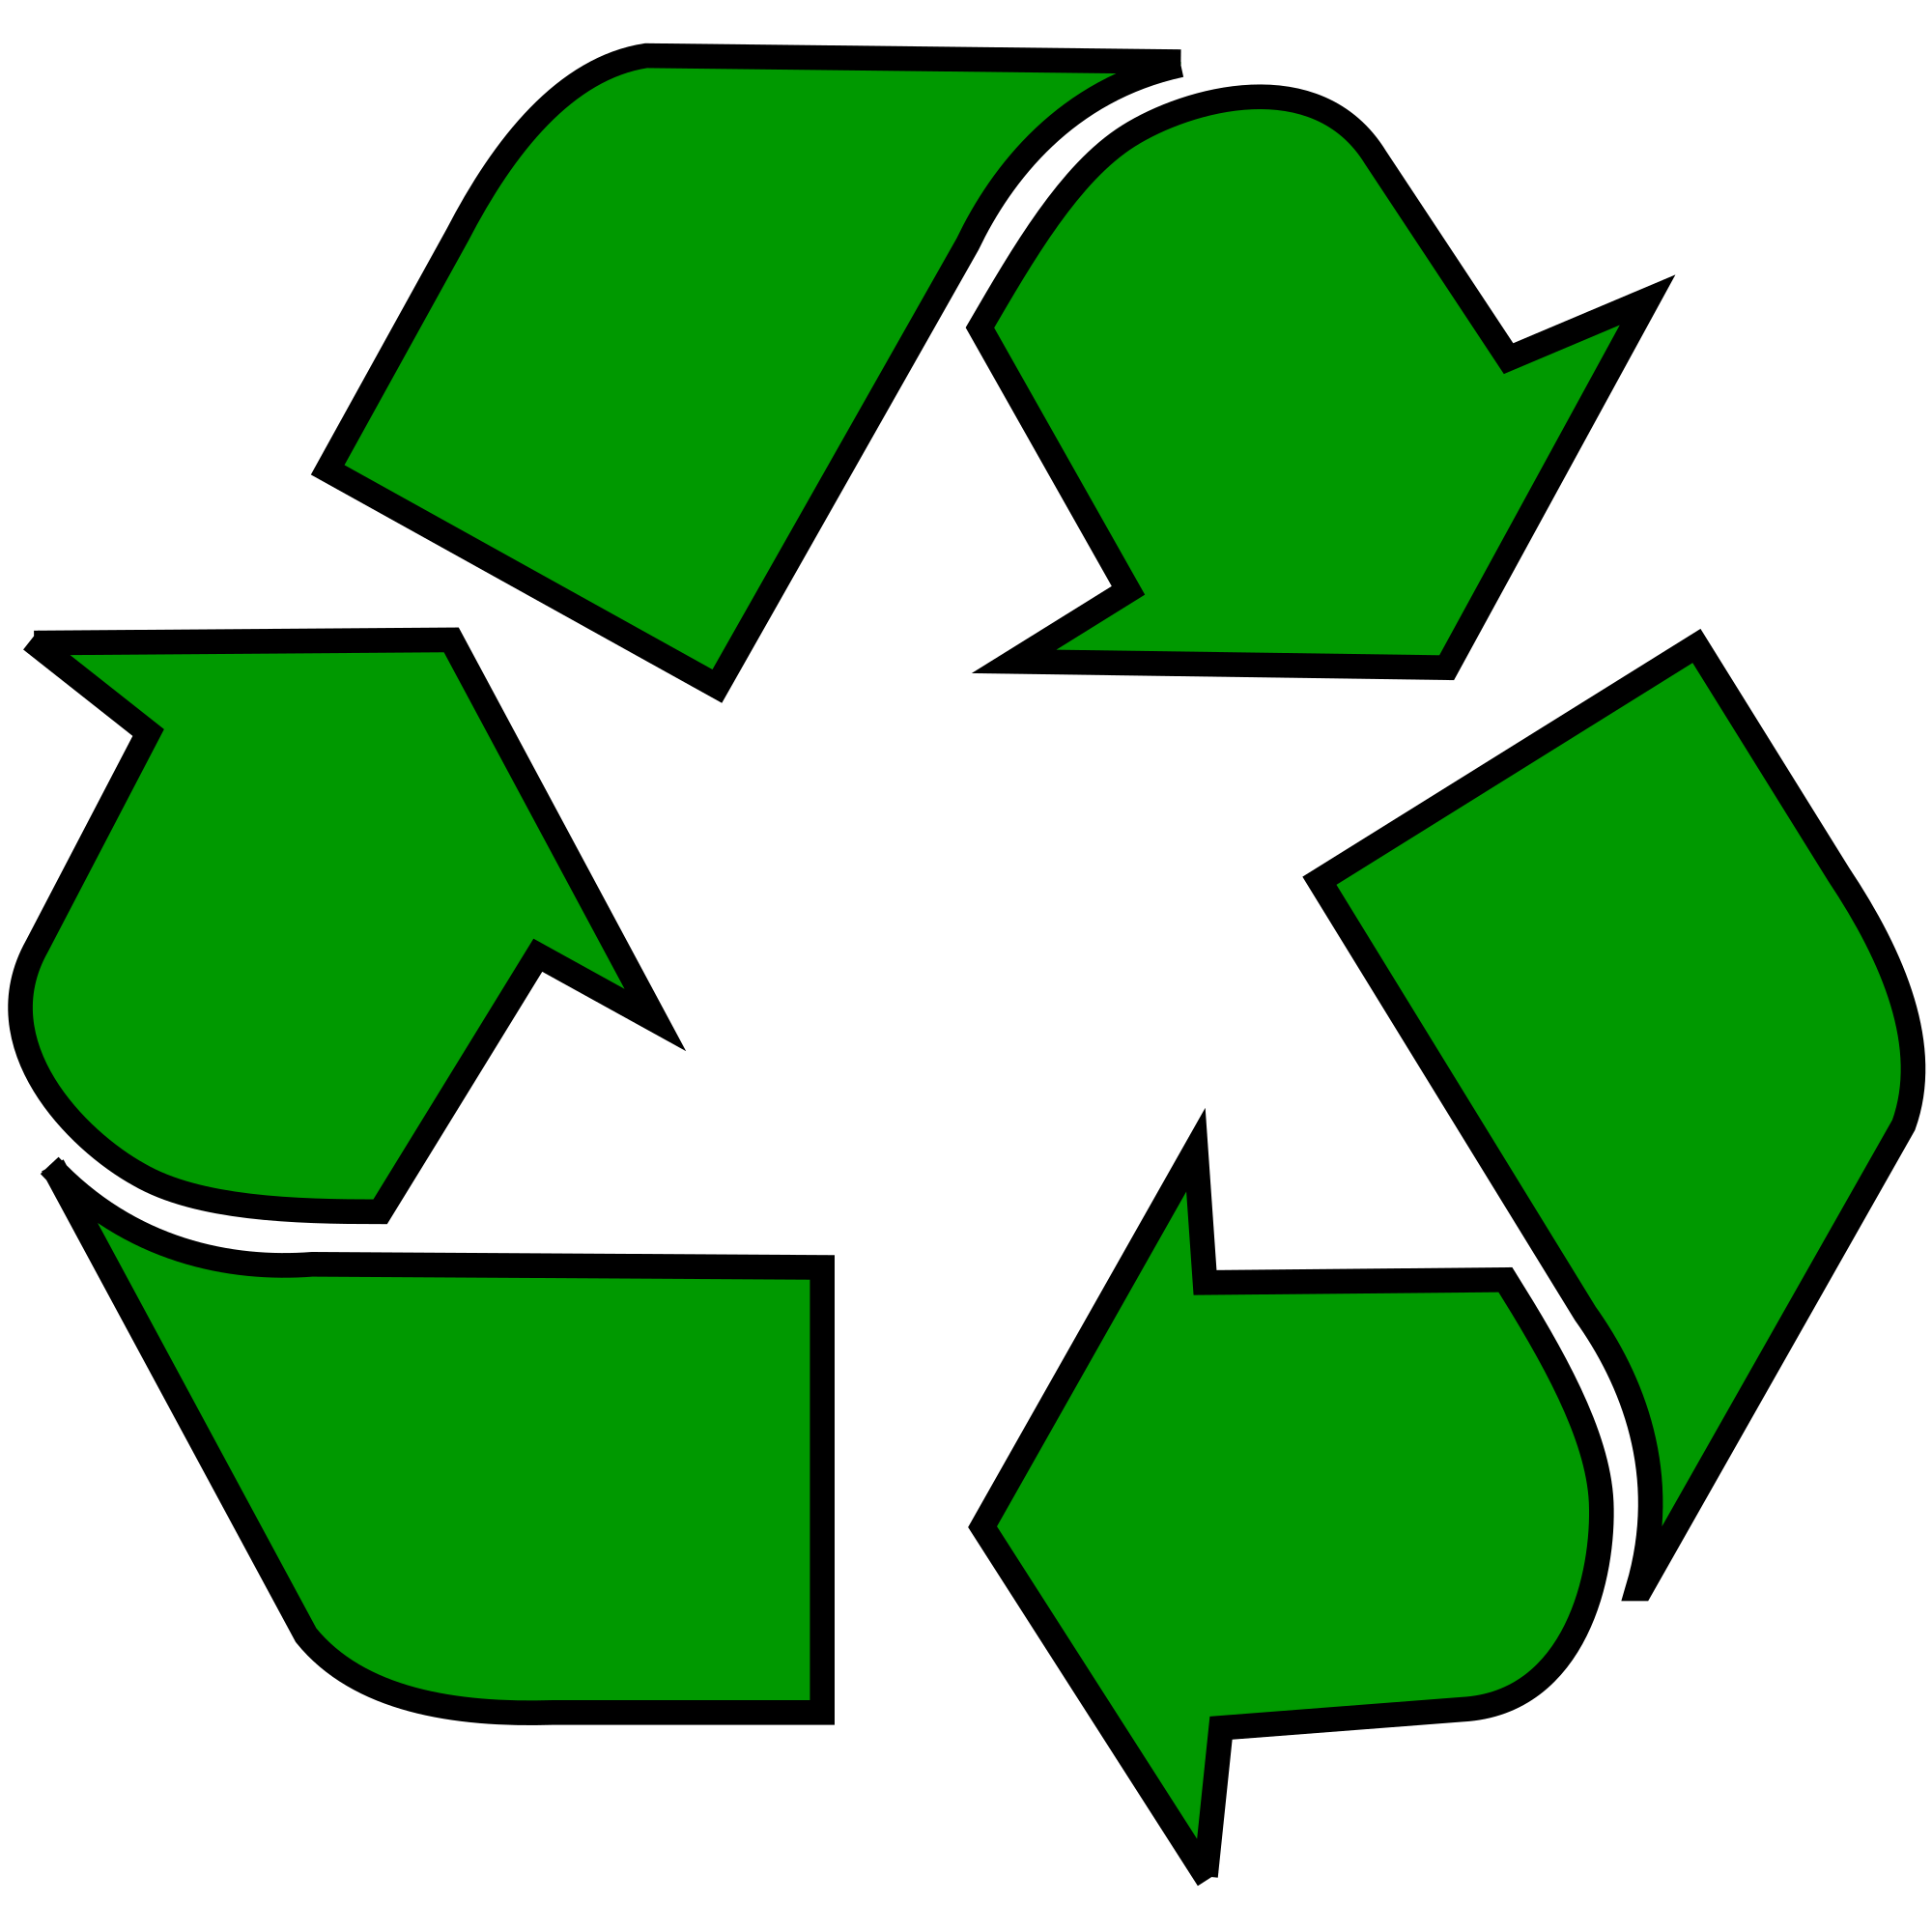 Upside Down Green Triangle Logo - Recycling symbol